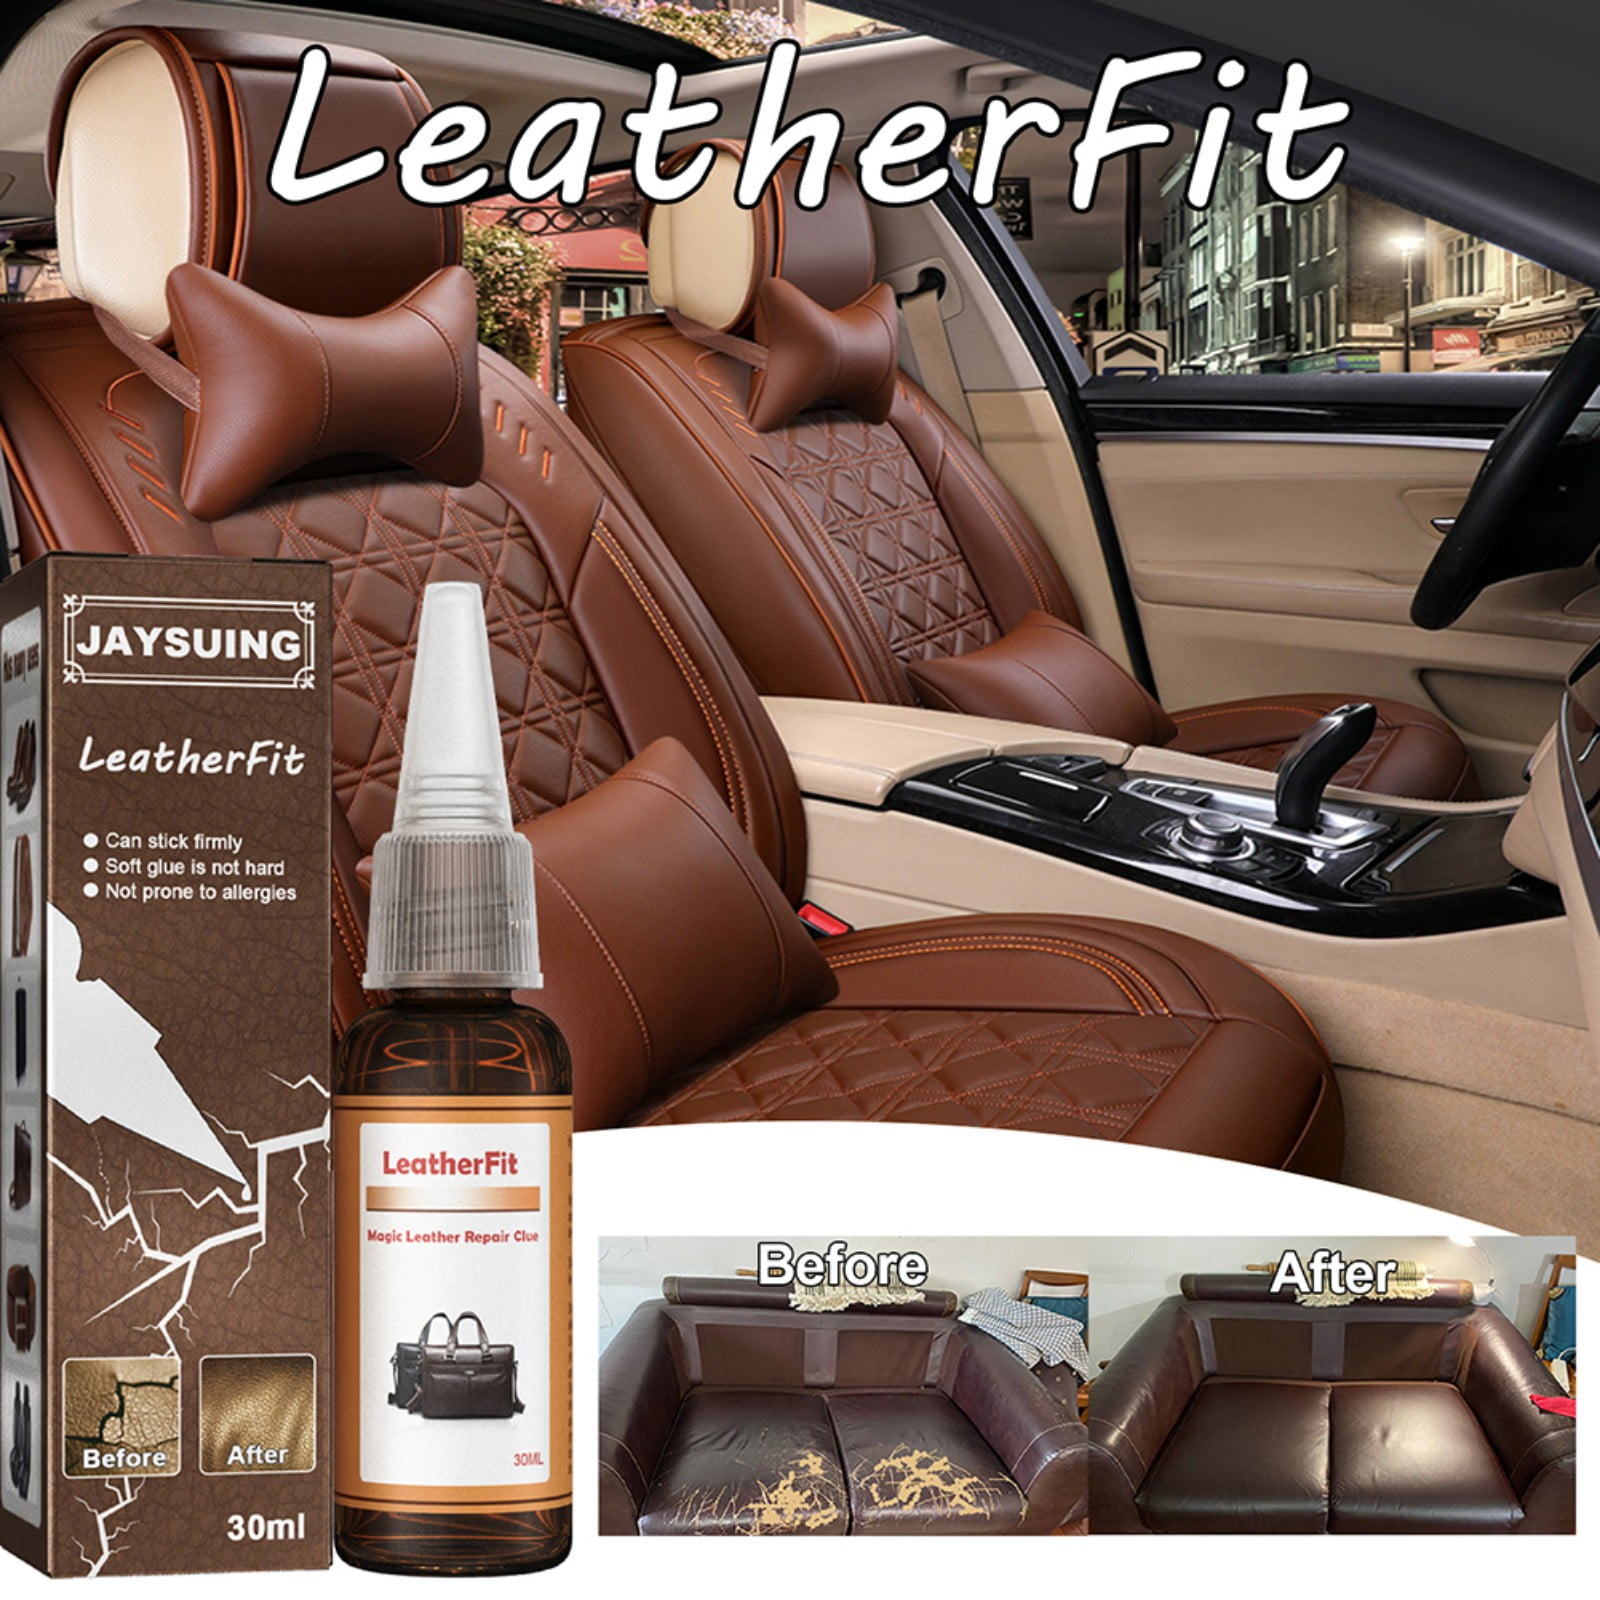 Leather glue/repair : r/Leathercraft